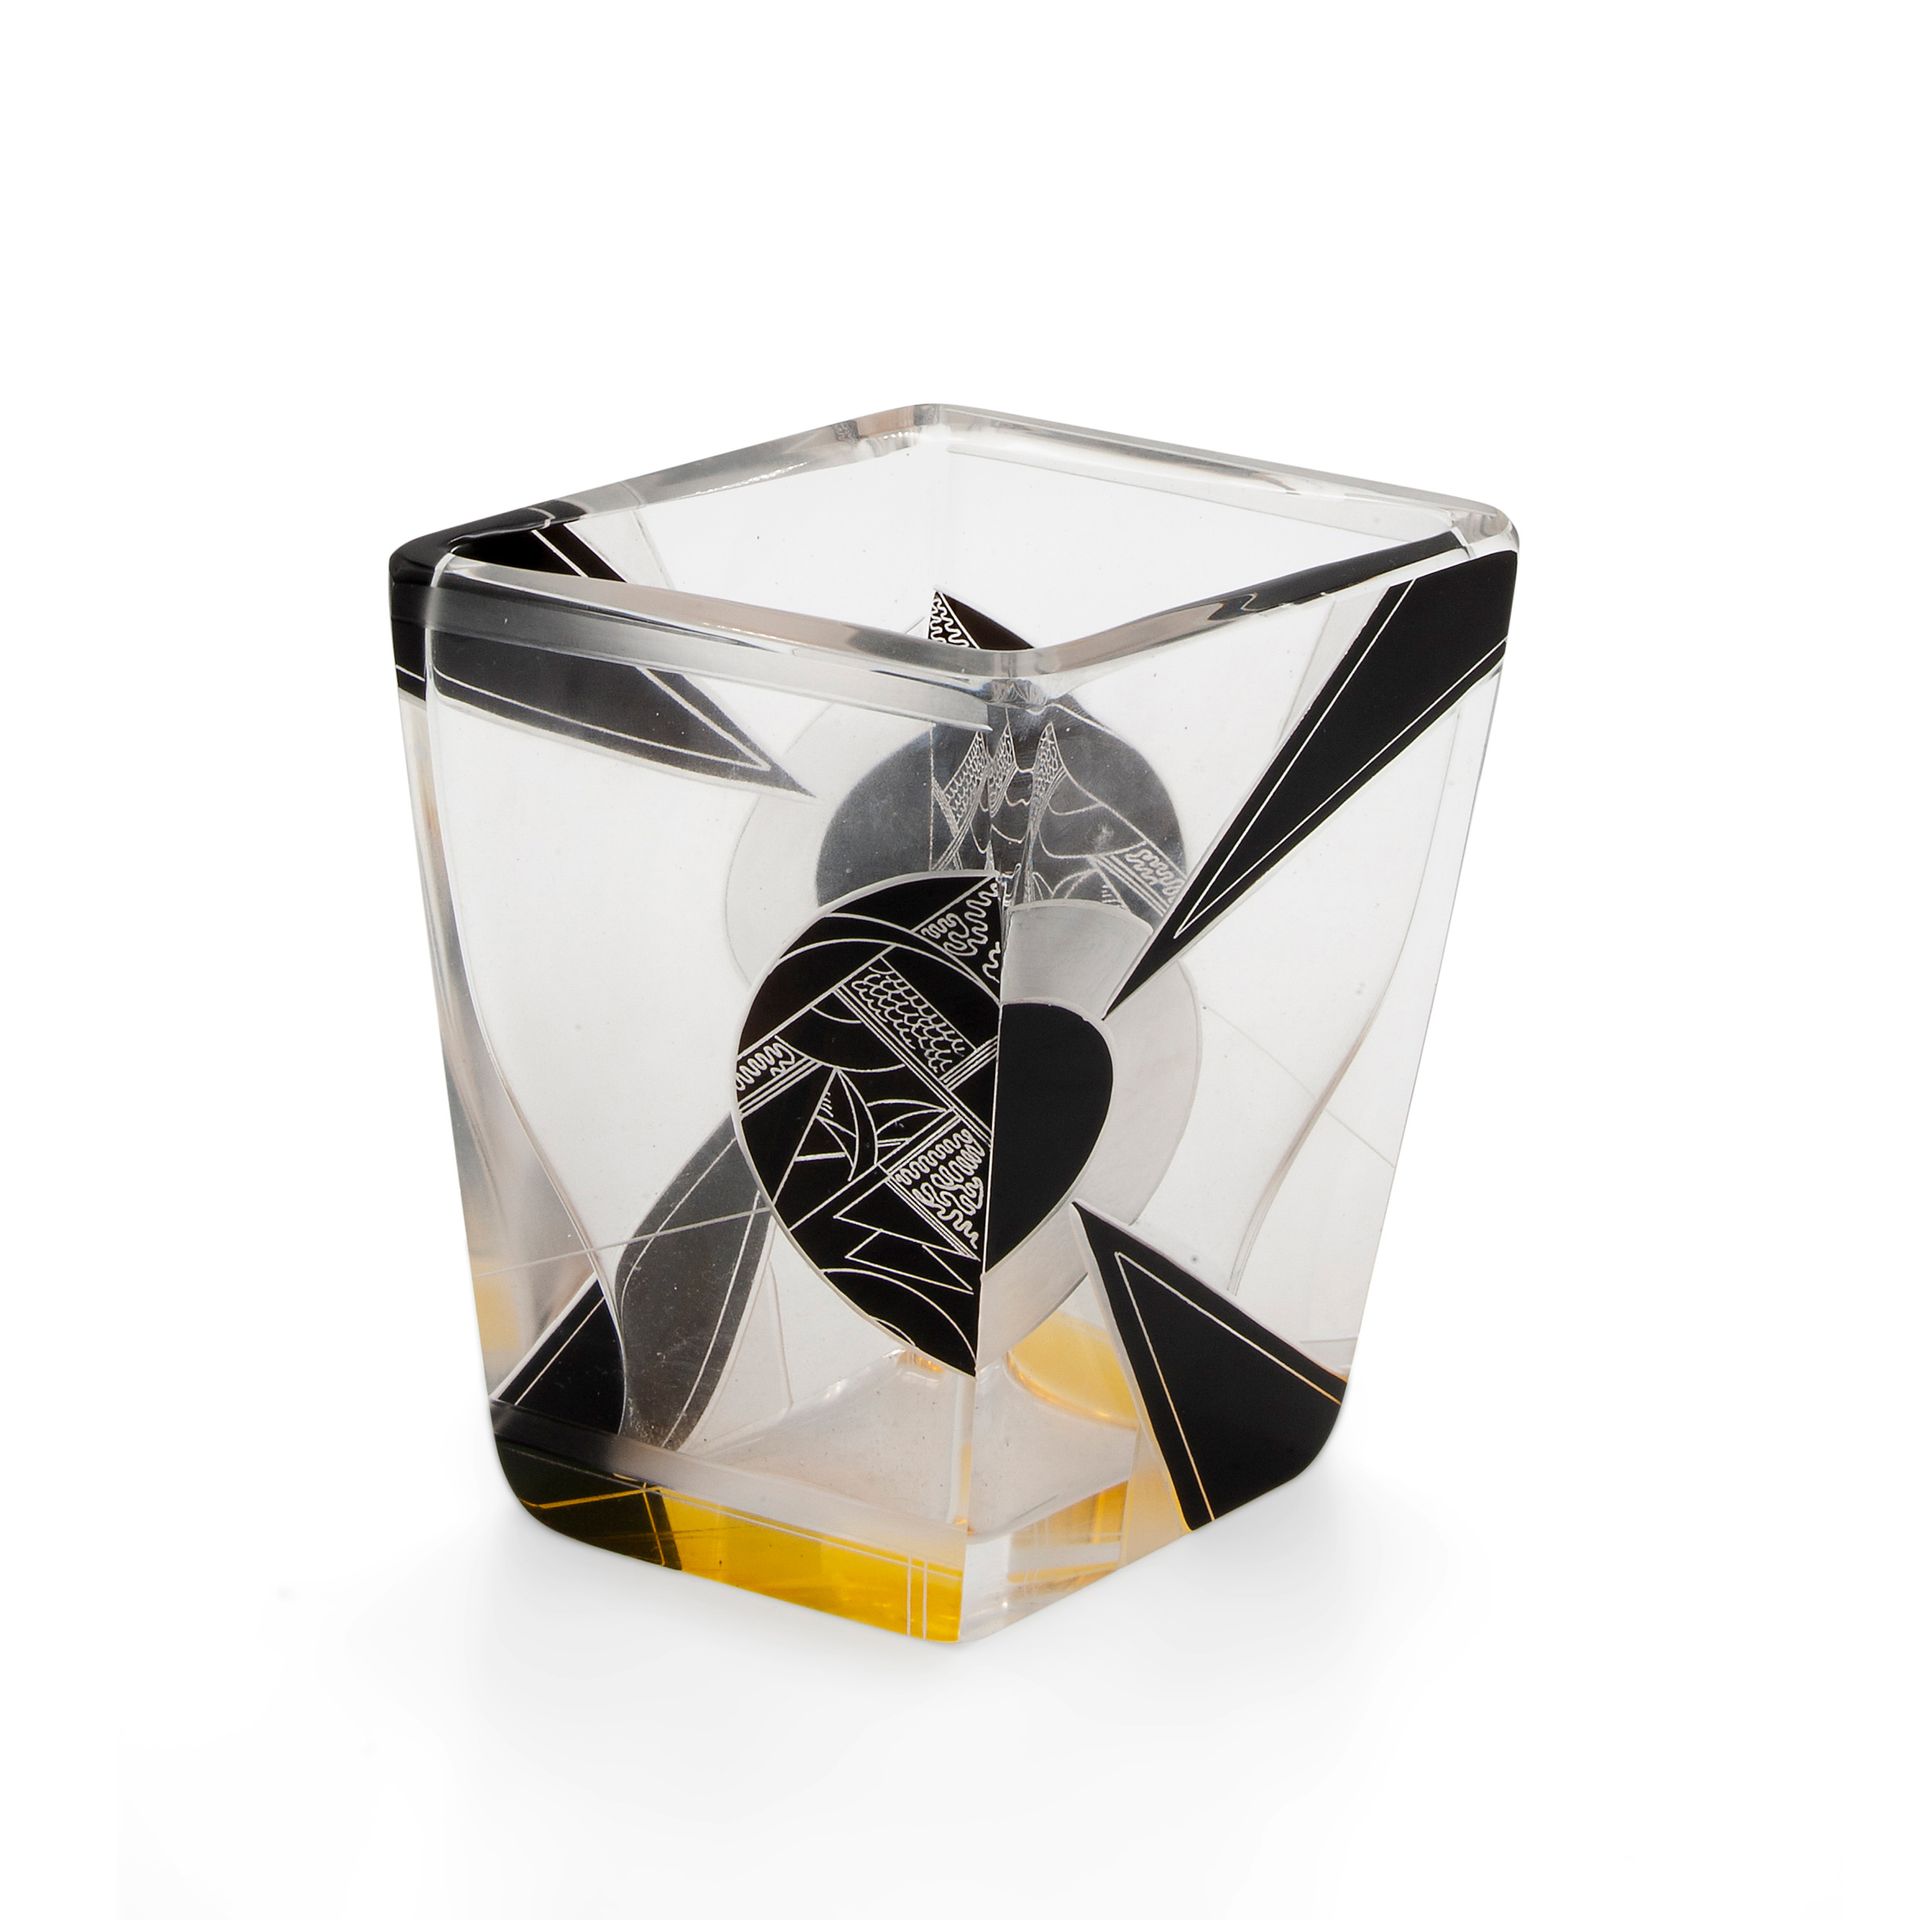 Vintage glass vase 有黑色的圆形和三角形装饰 尺寸7.6x7x3.7英寸。